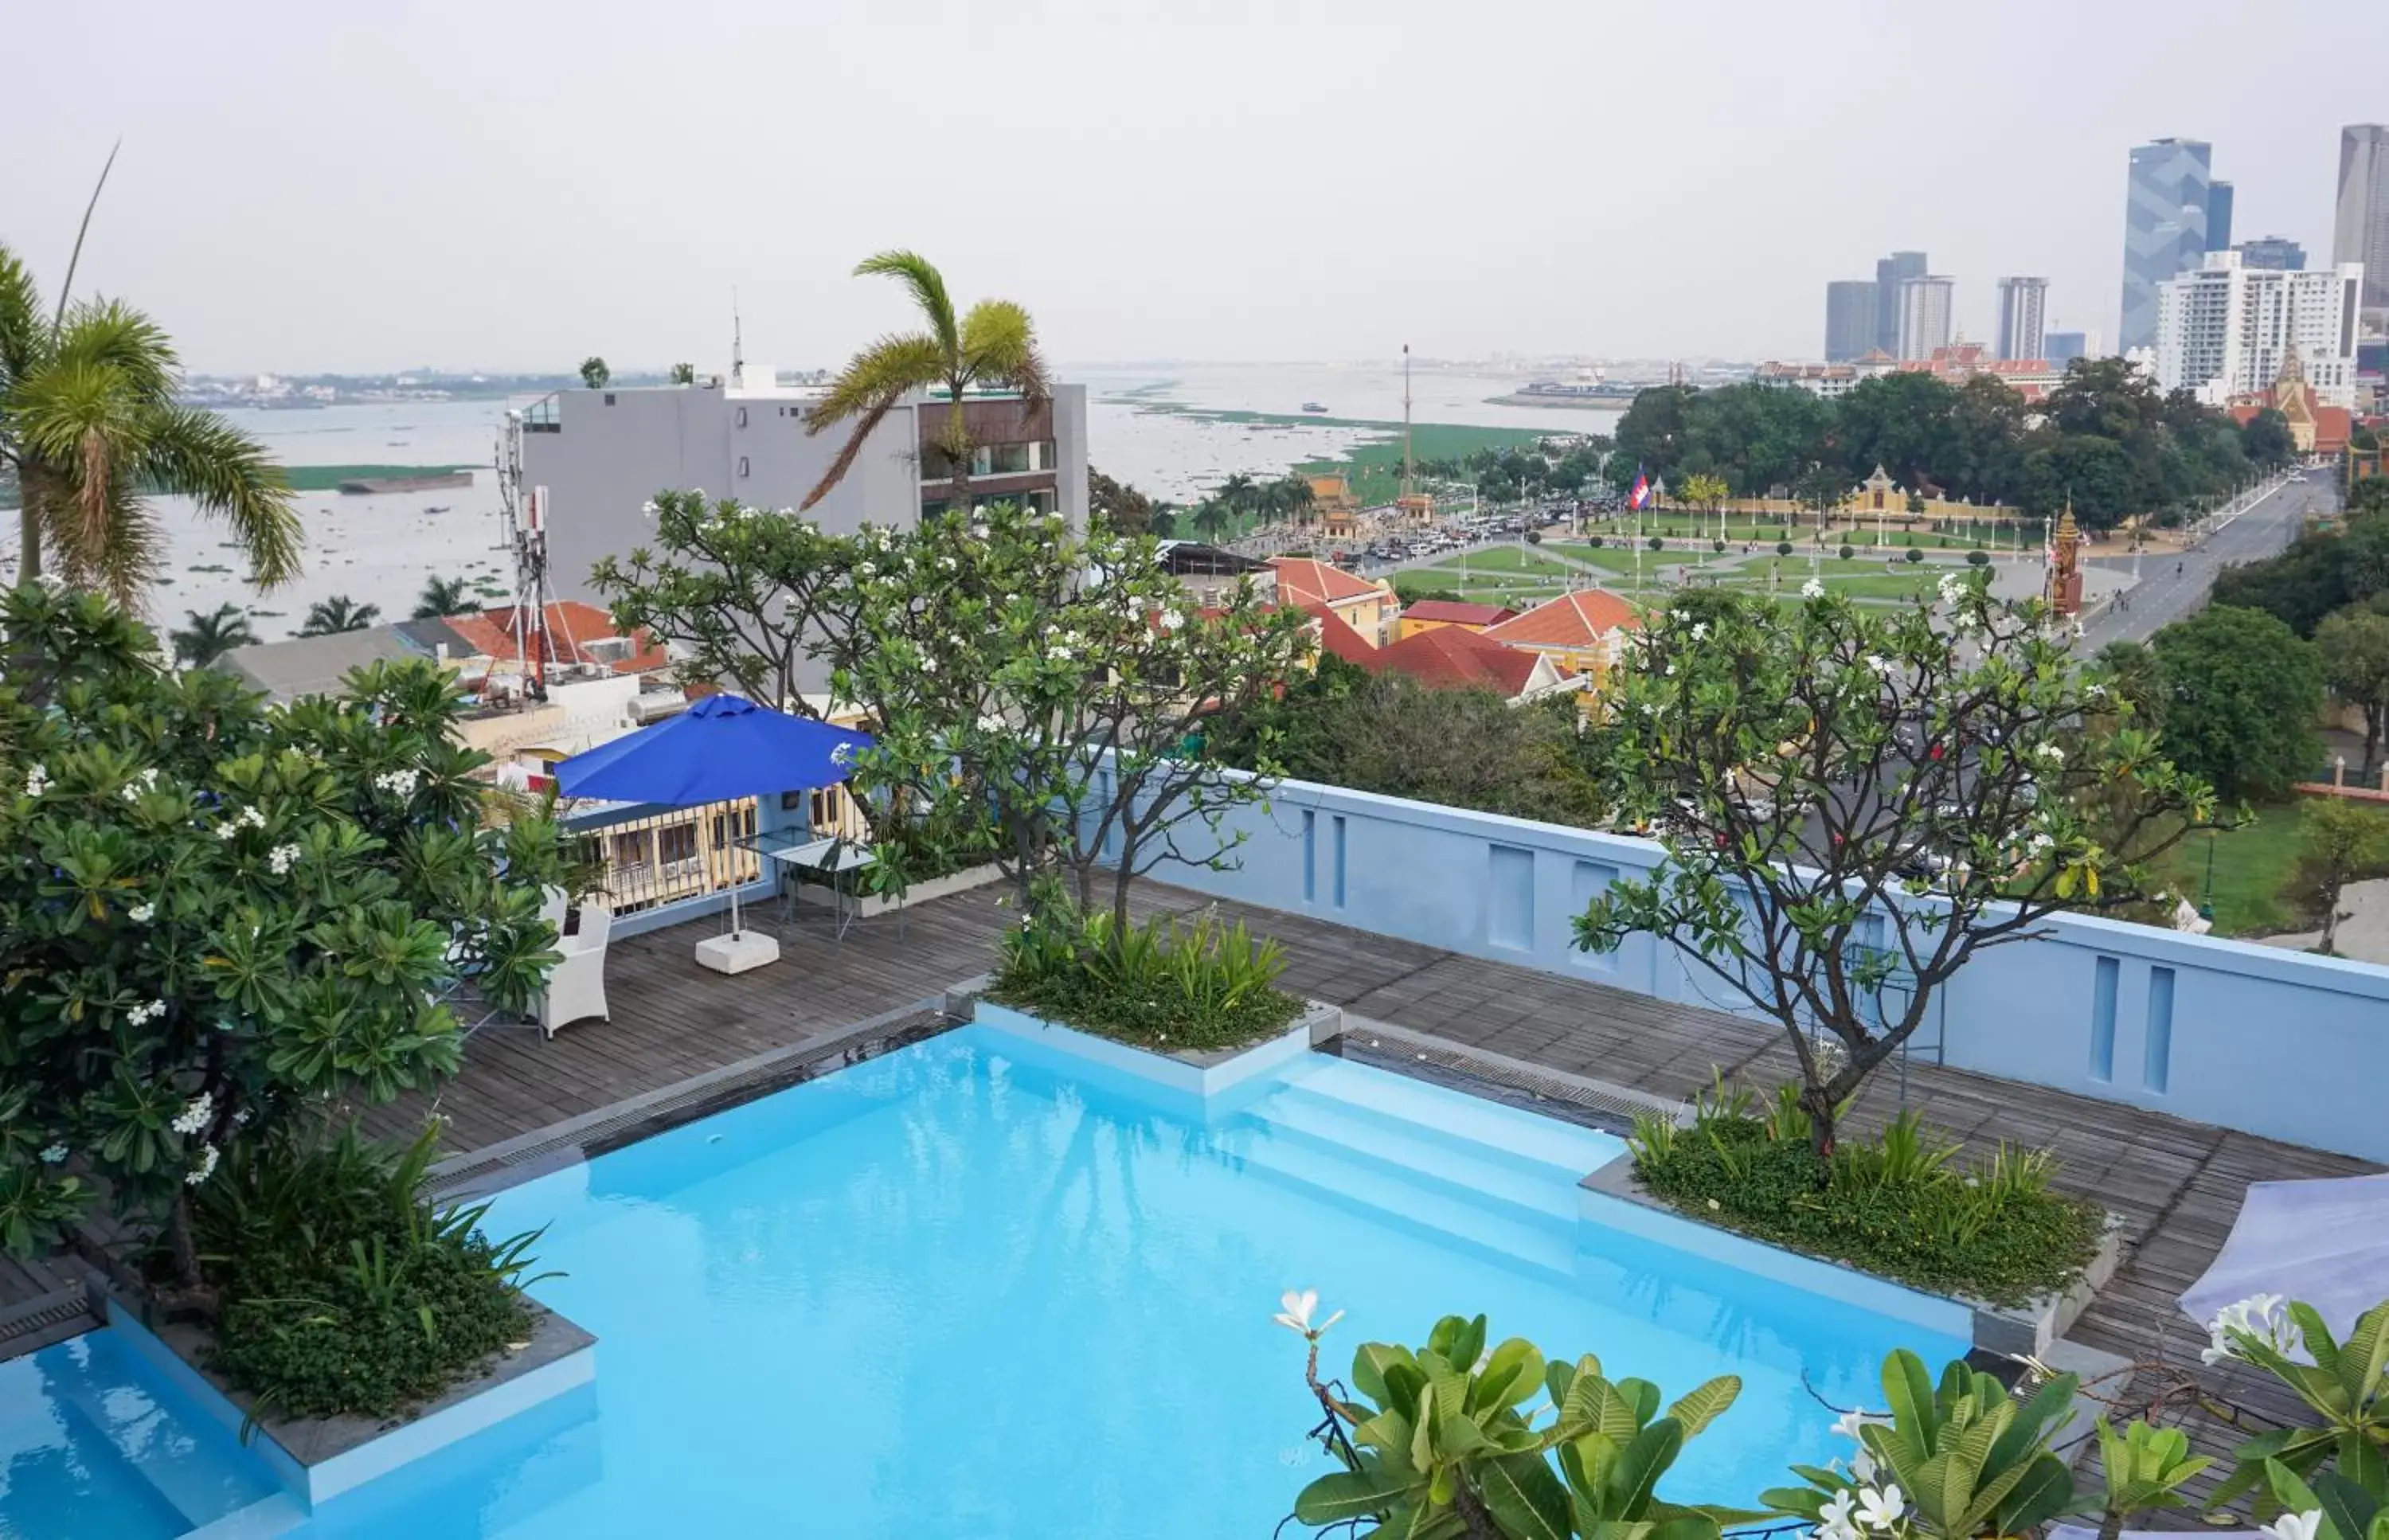 Pool View in The Frangipani Royal Palace Hotel